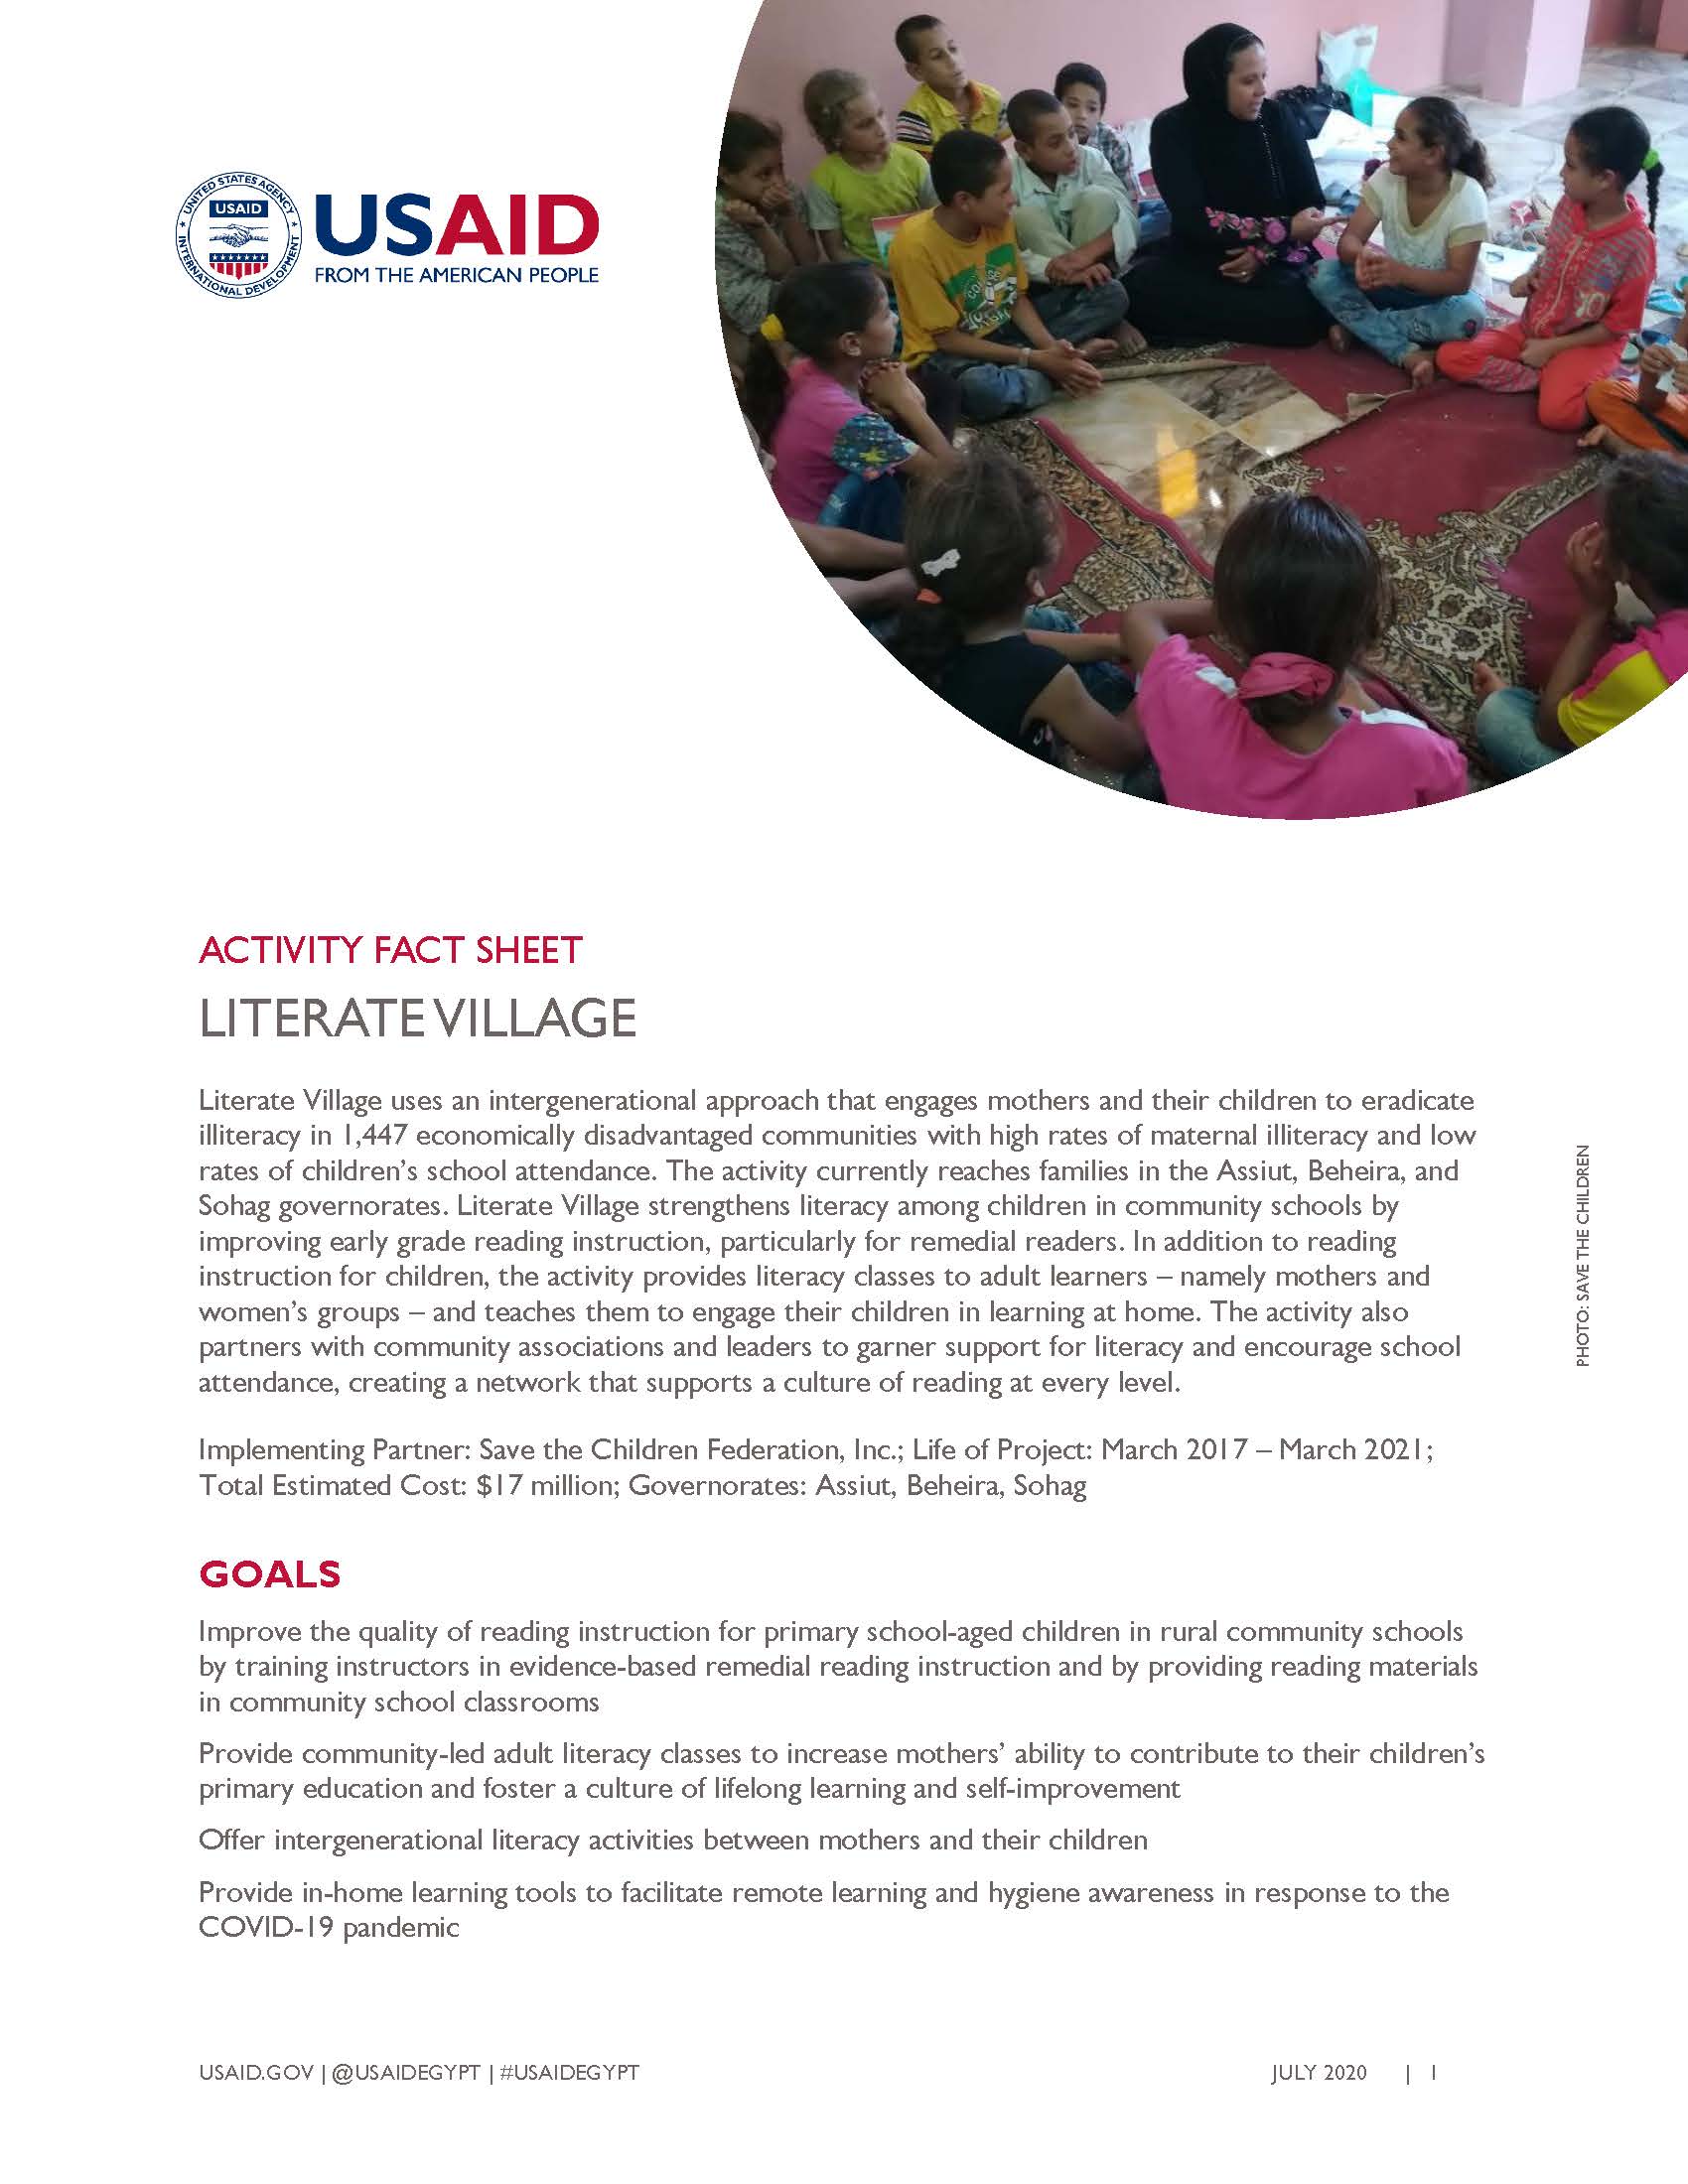 USAID/Egypt Activity Fact Sheet: Literate Village